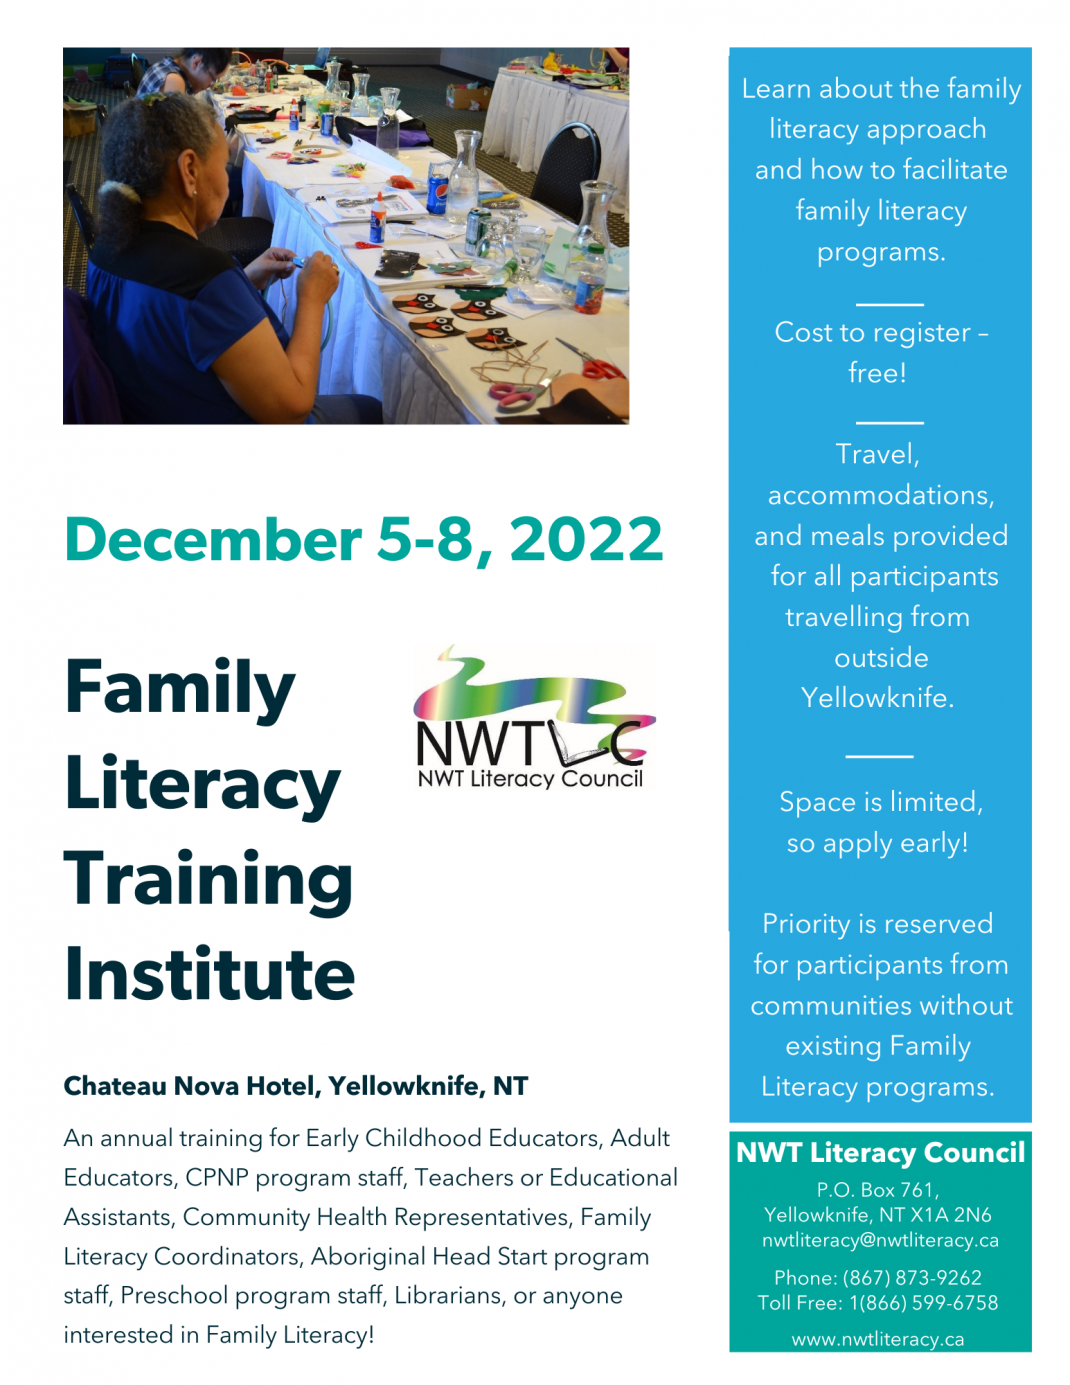 Family Literacy Training Institute - Chateau Nova Hotel, Yellowknife - December 5-8, 2022